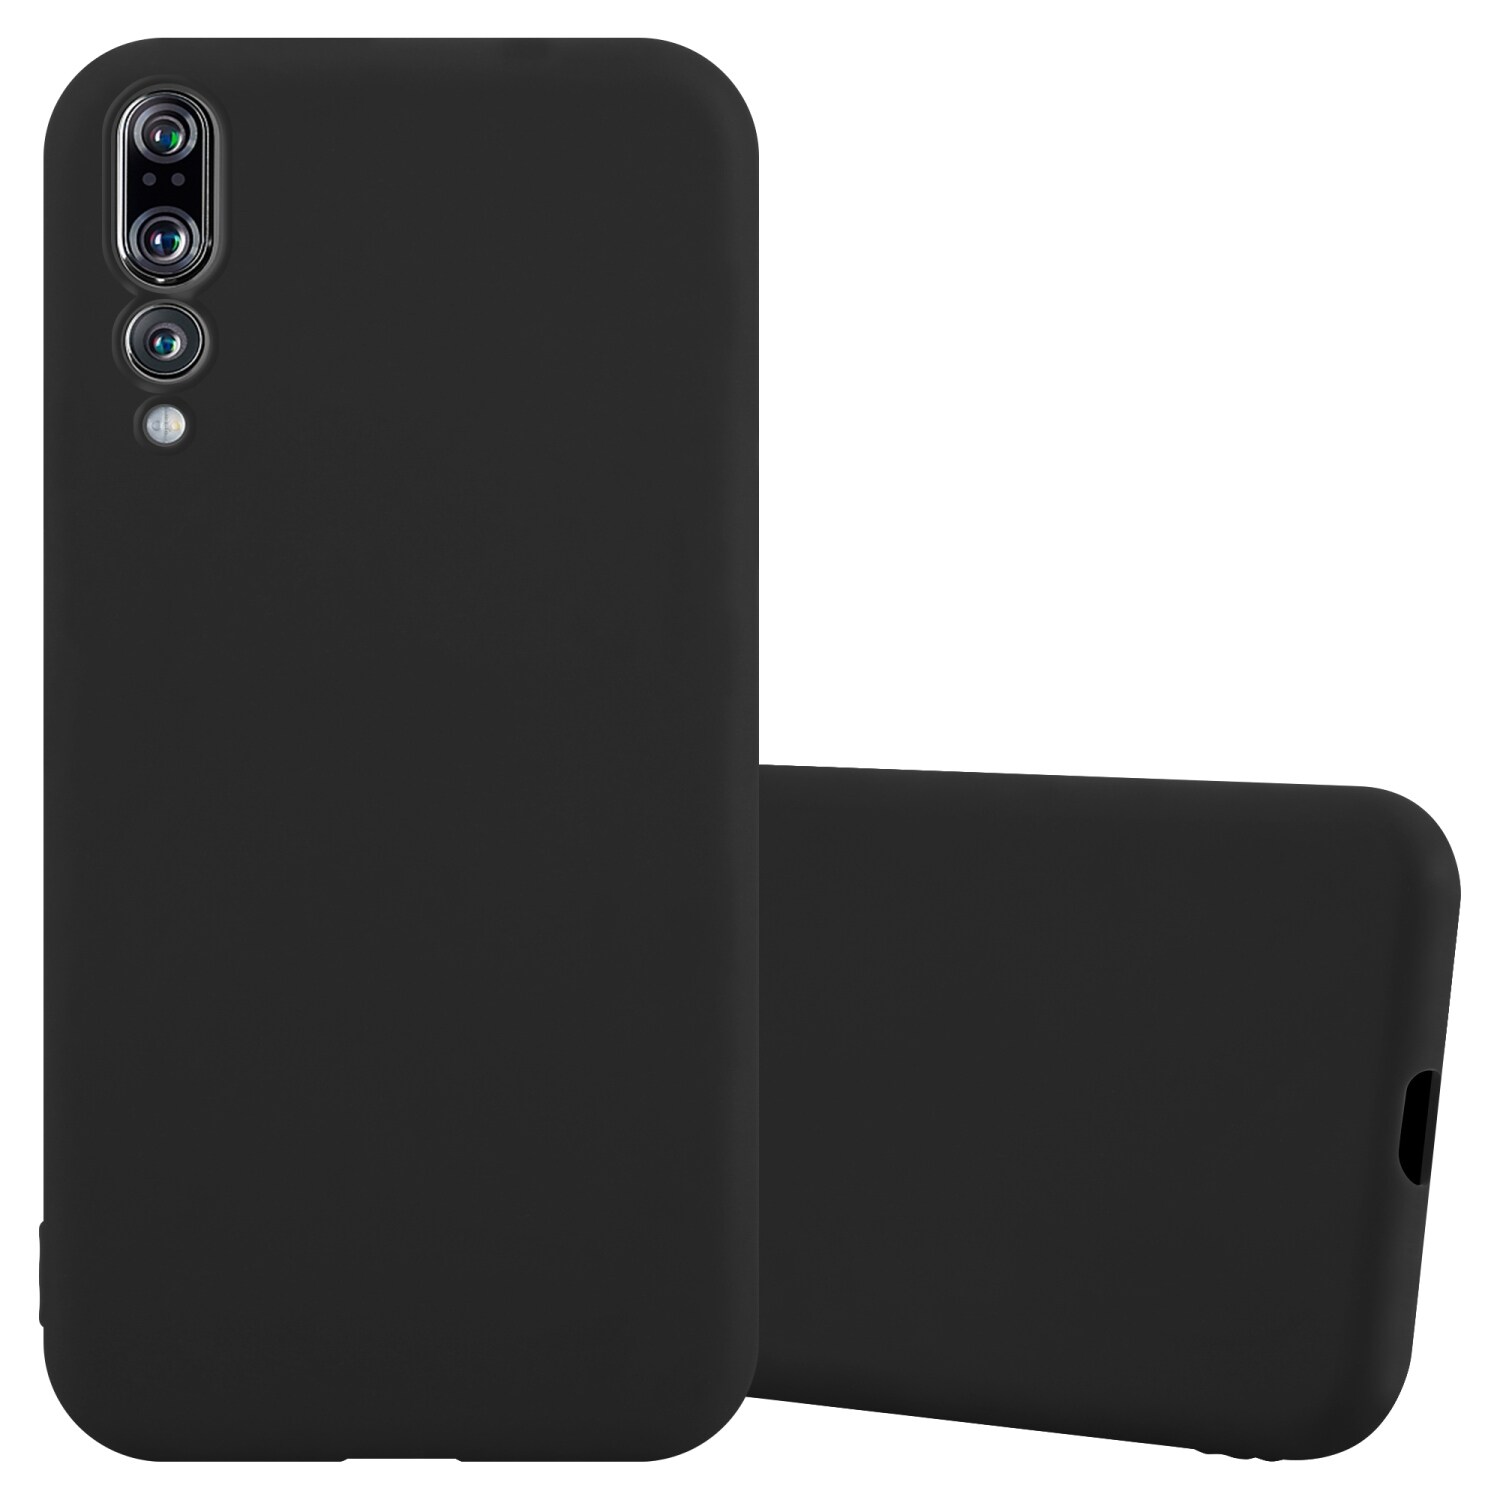 Huawei P20 PRO / P20 PLUS silikondeksel cover (svart) - Elkjøp